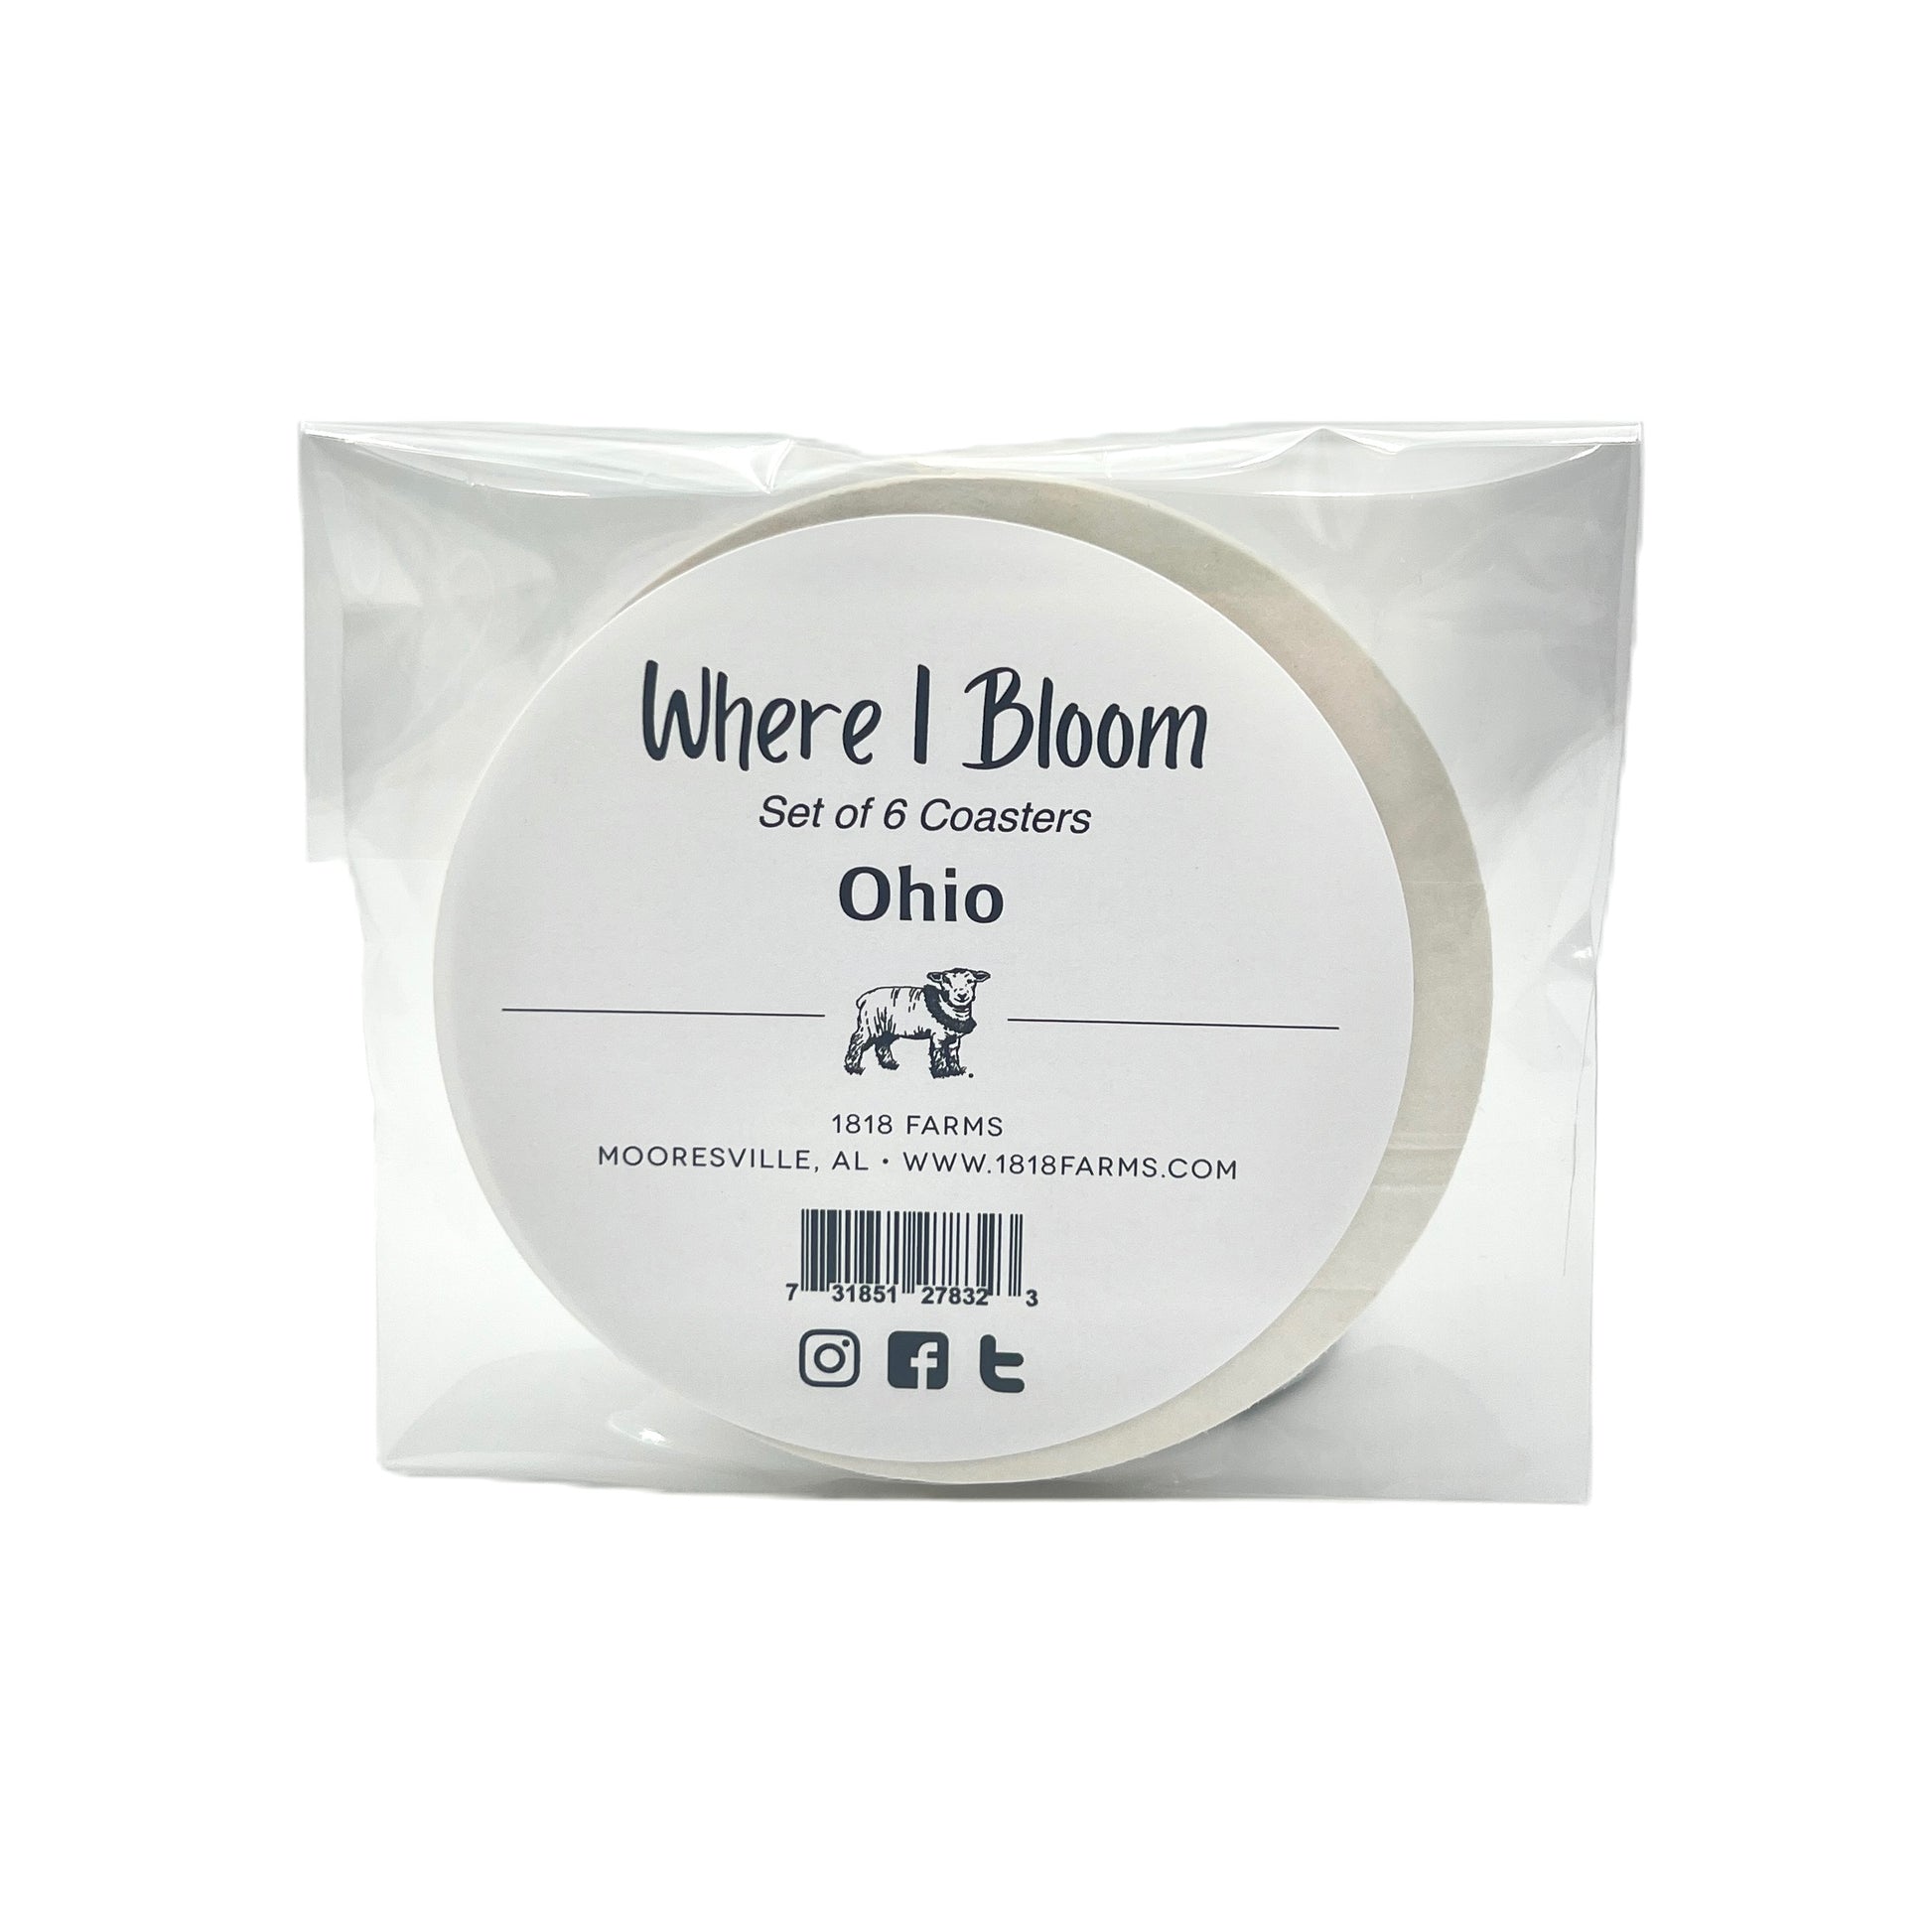 Ohio Themed Coasters (Set of 6)  - "Where I Bloom" Collection Coaster 1818 Farms   